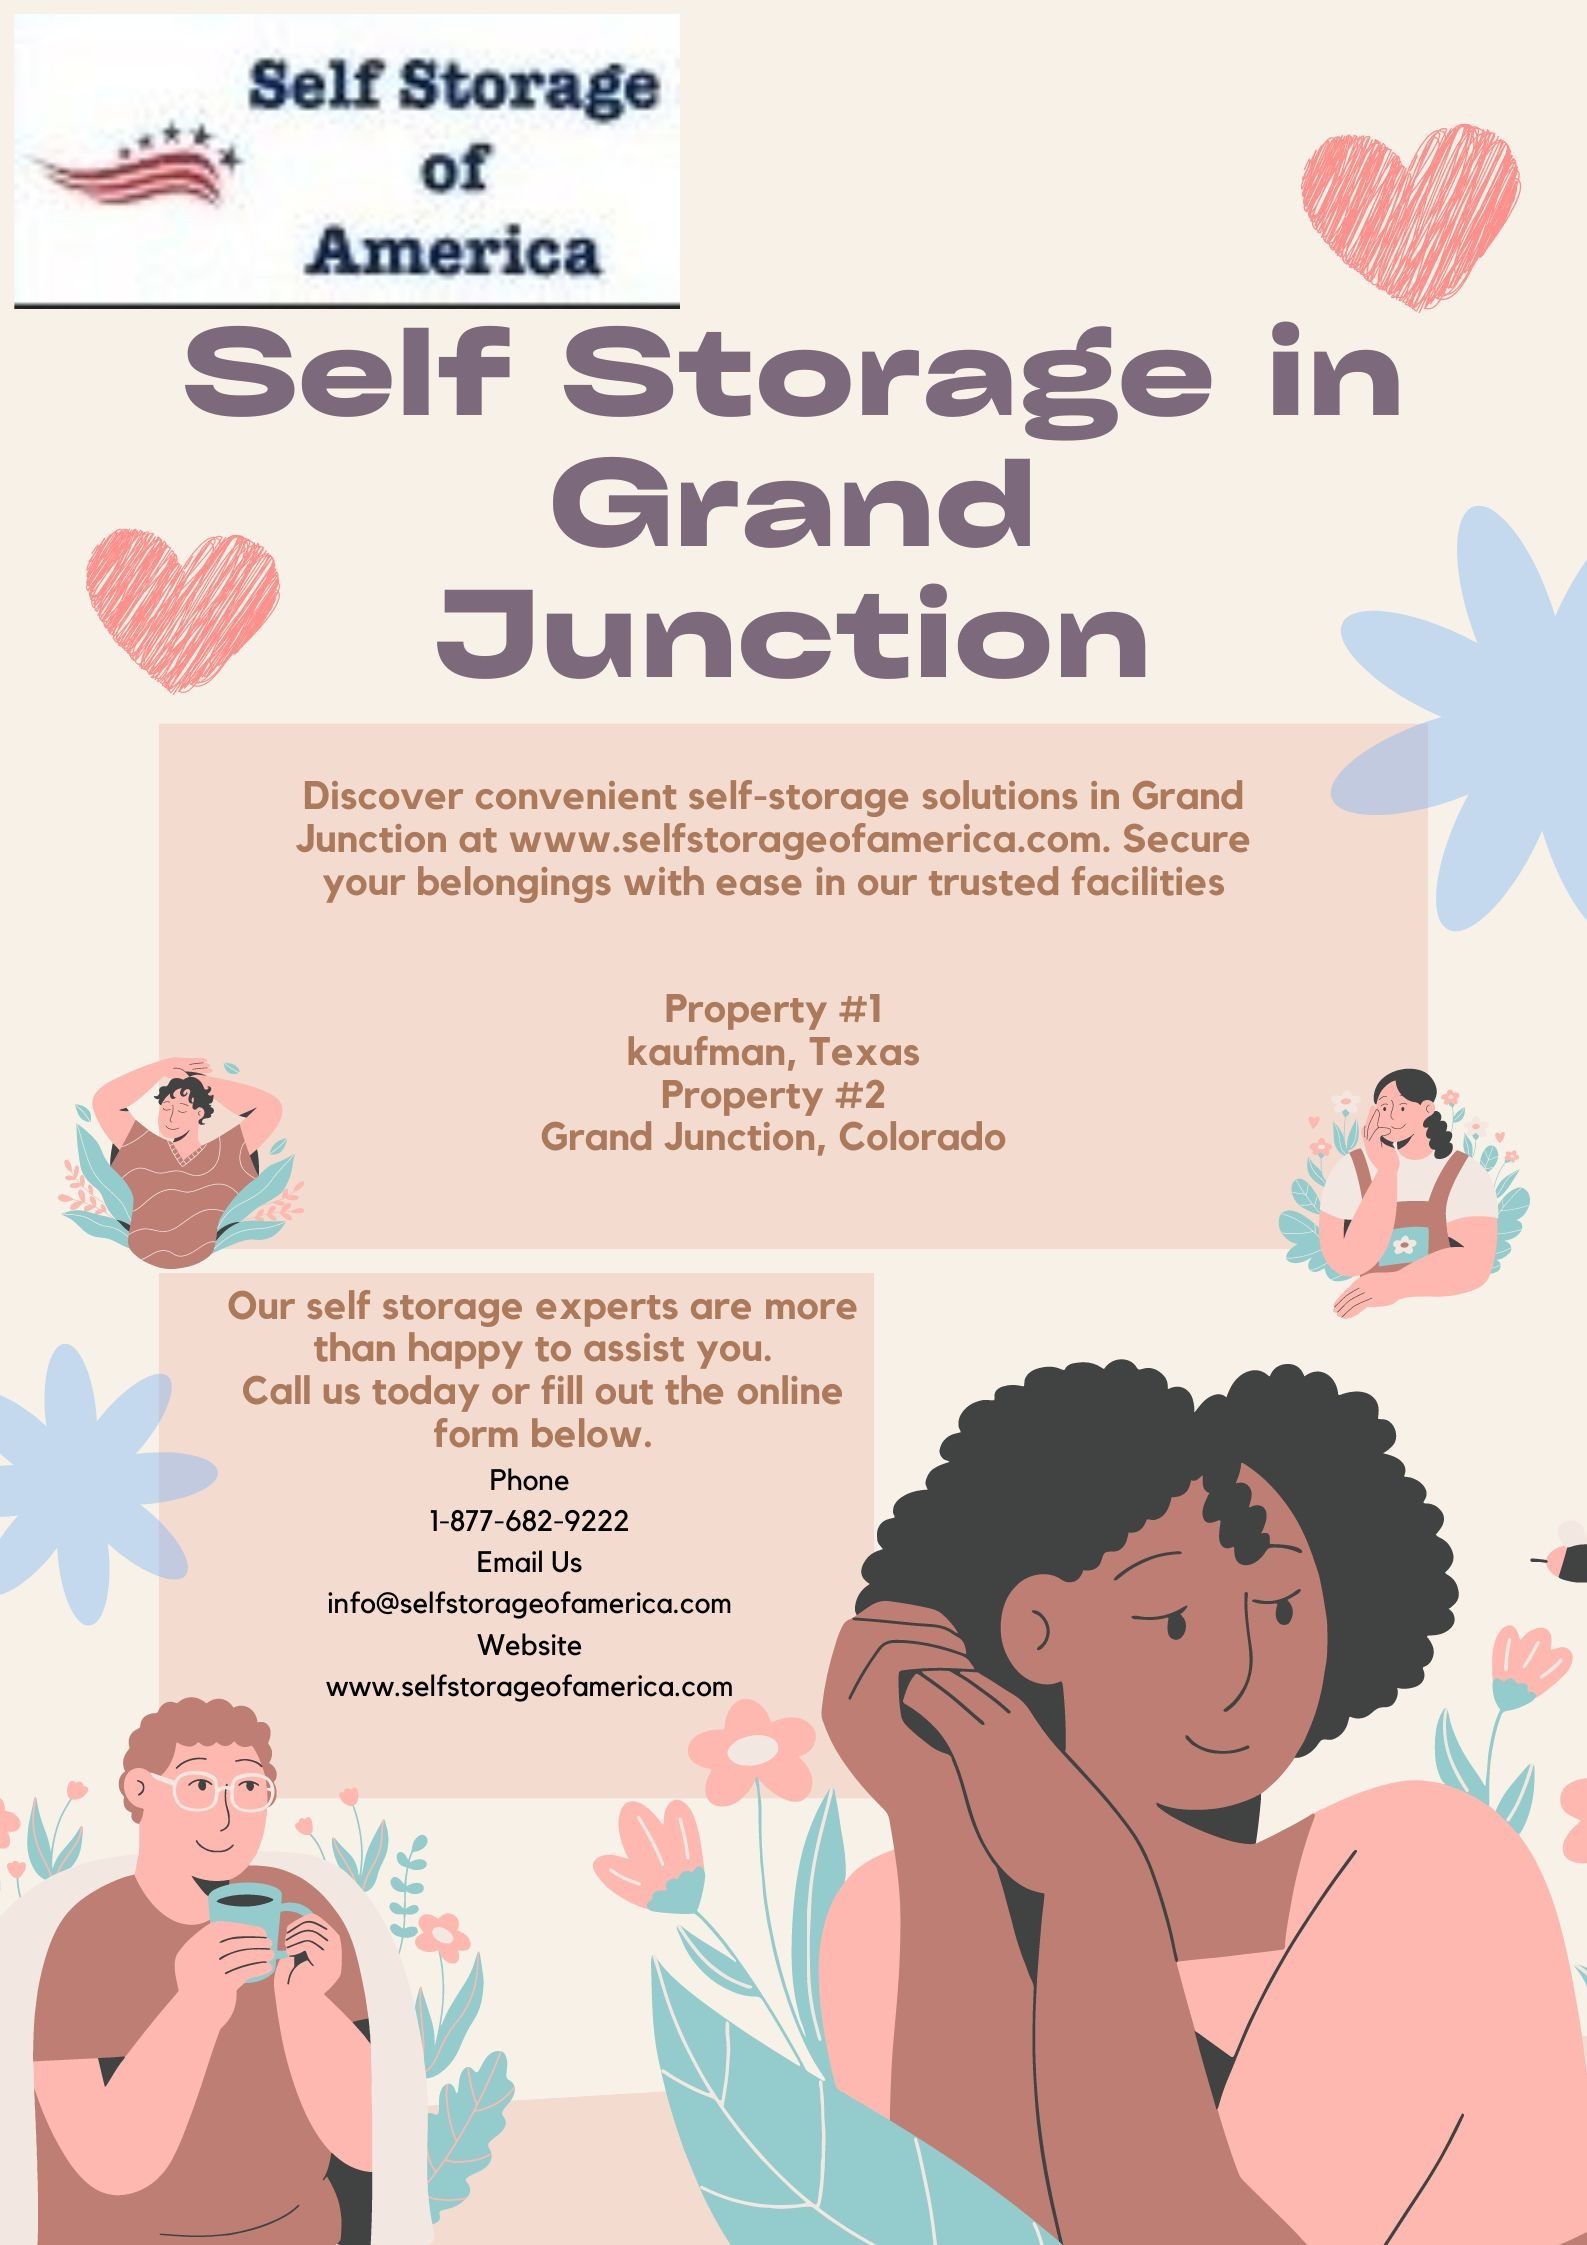 Self Storage in Grand Junction - www.selfstorageofamerica.com